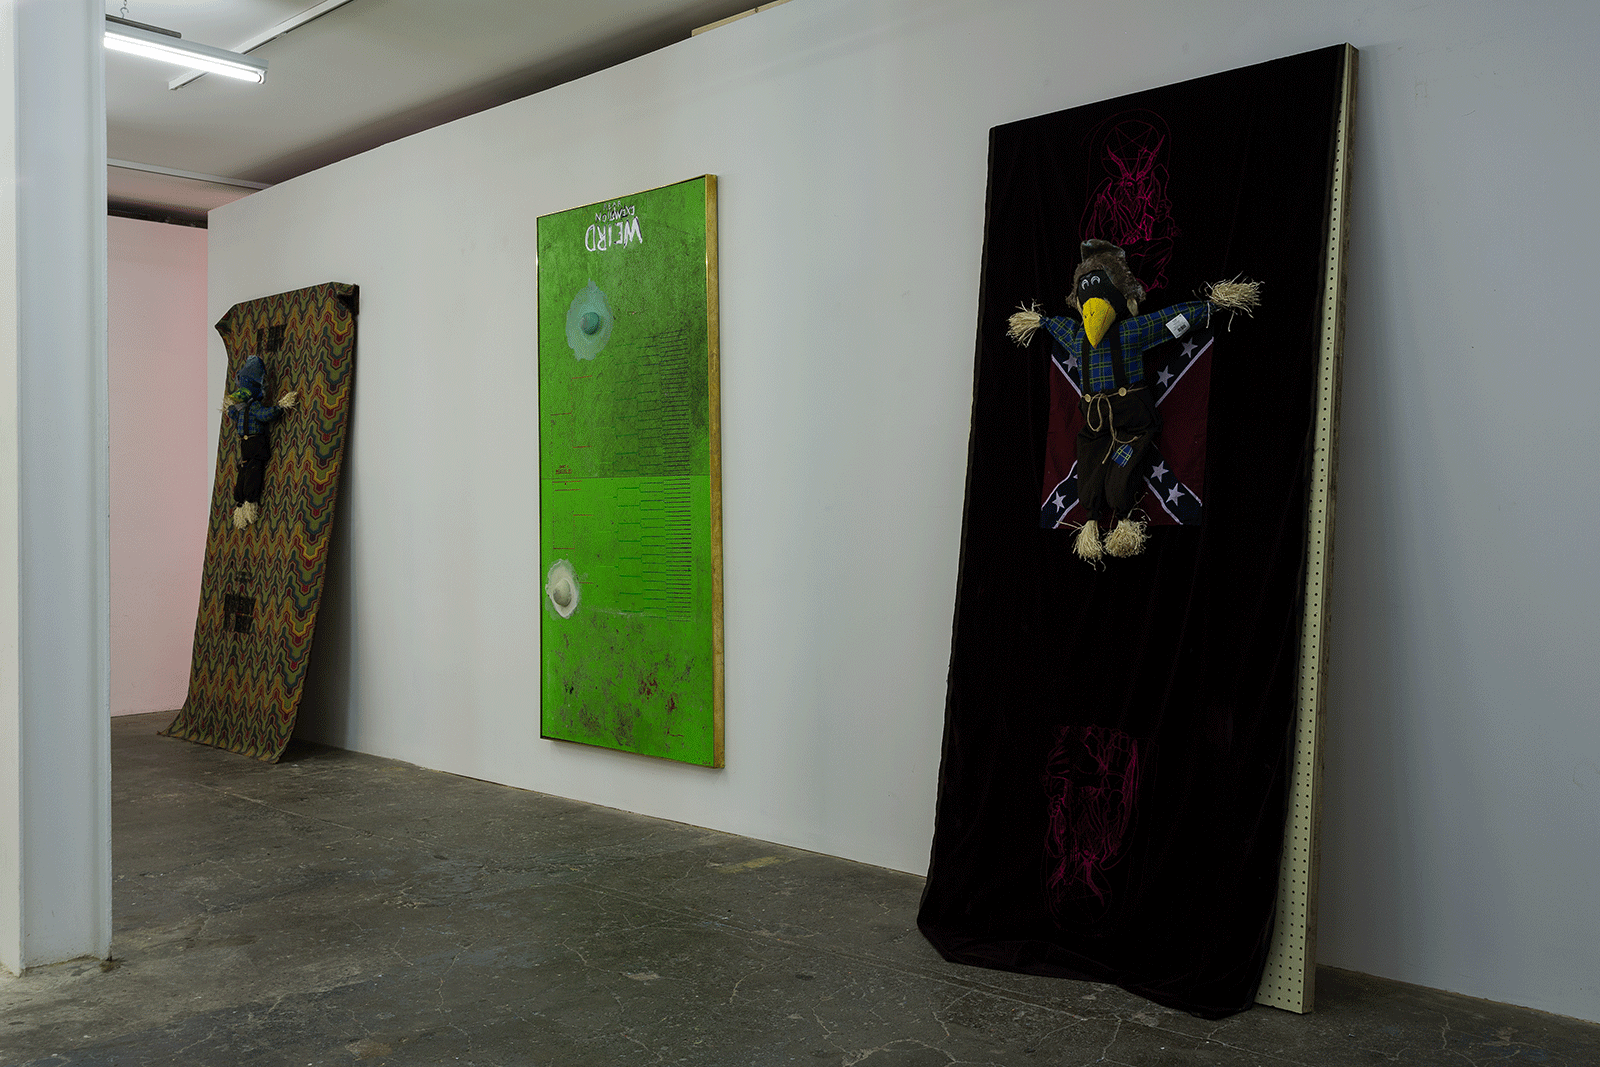 Stephen G. Rhodes, The Eleventh Hobby, 2014, Installation view. The Eleventh Hobby
, Stephen G. Rhodes